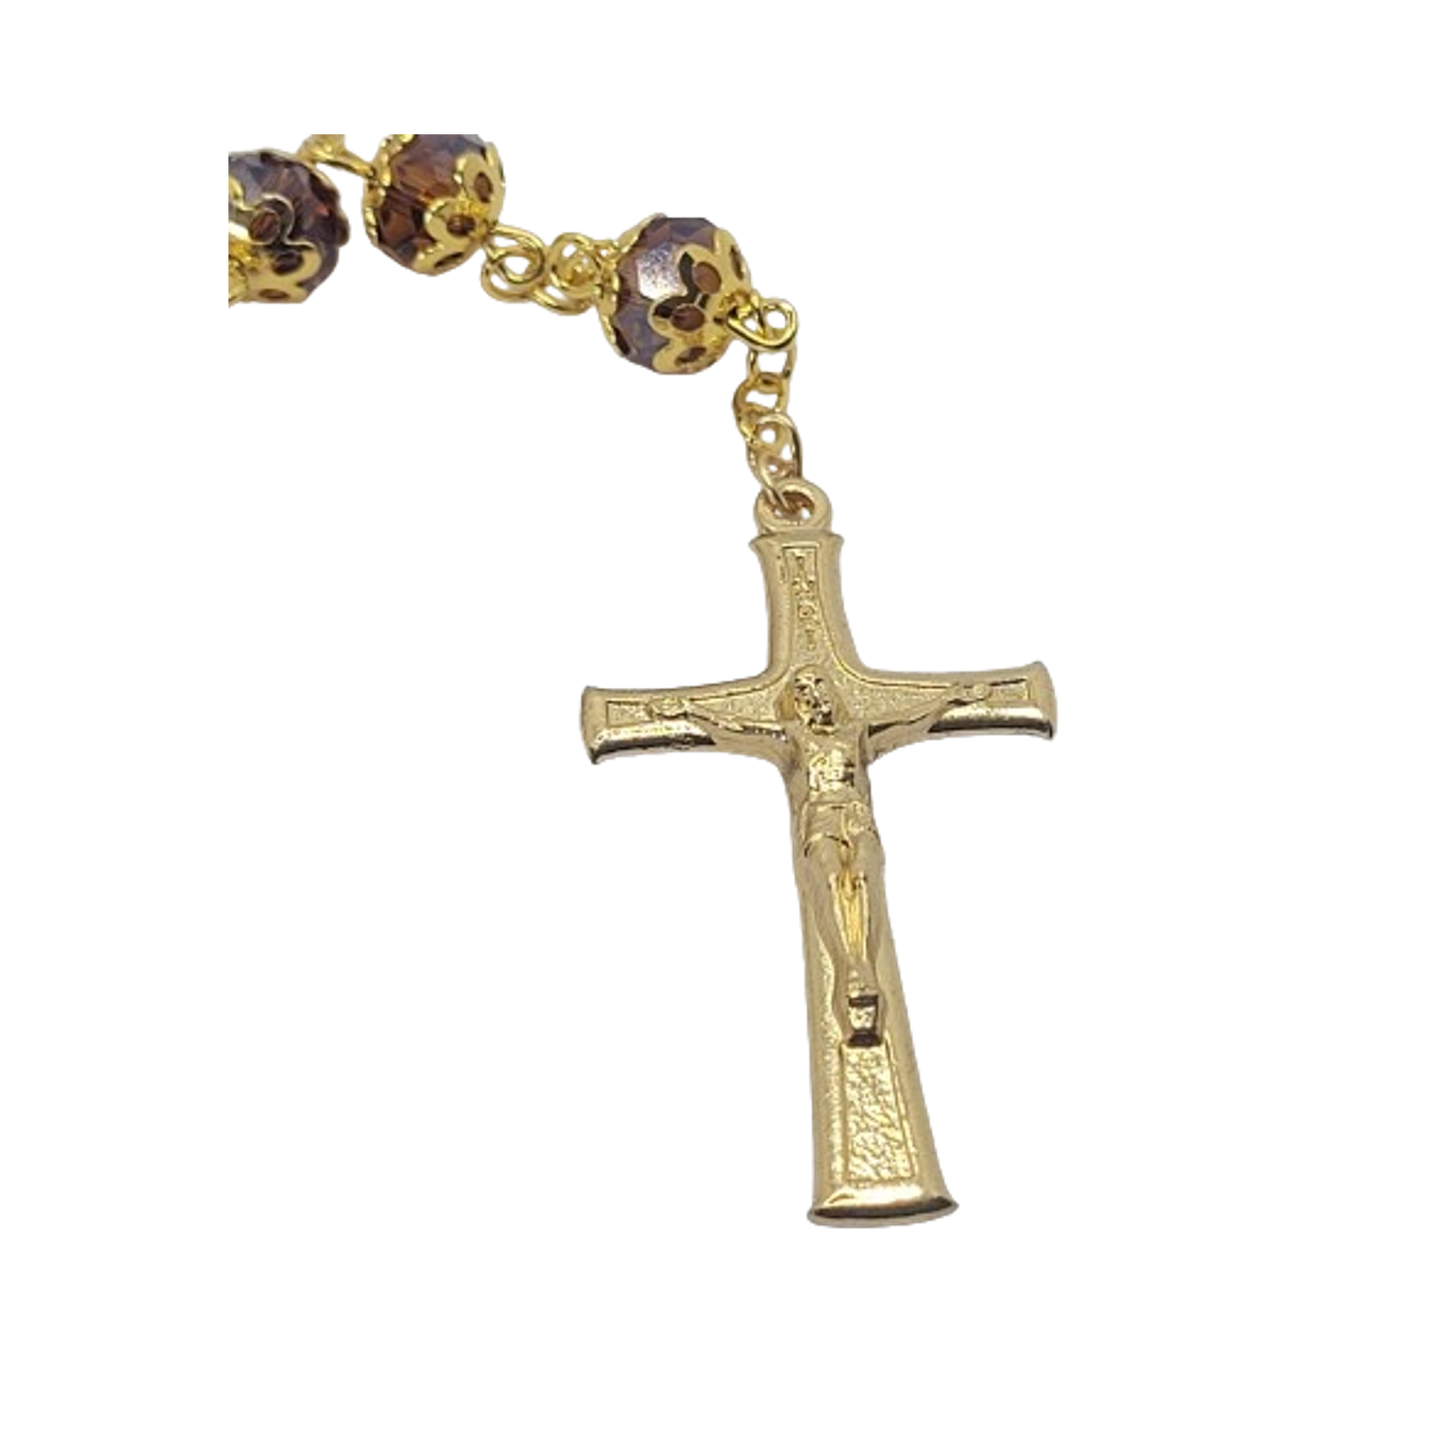 Amber Crystal & Golden Rosary